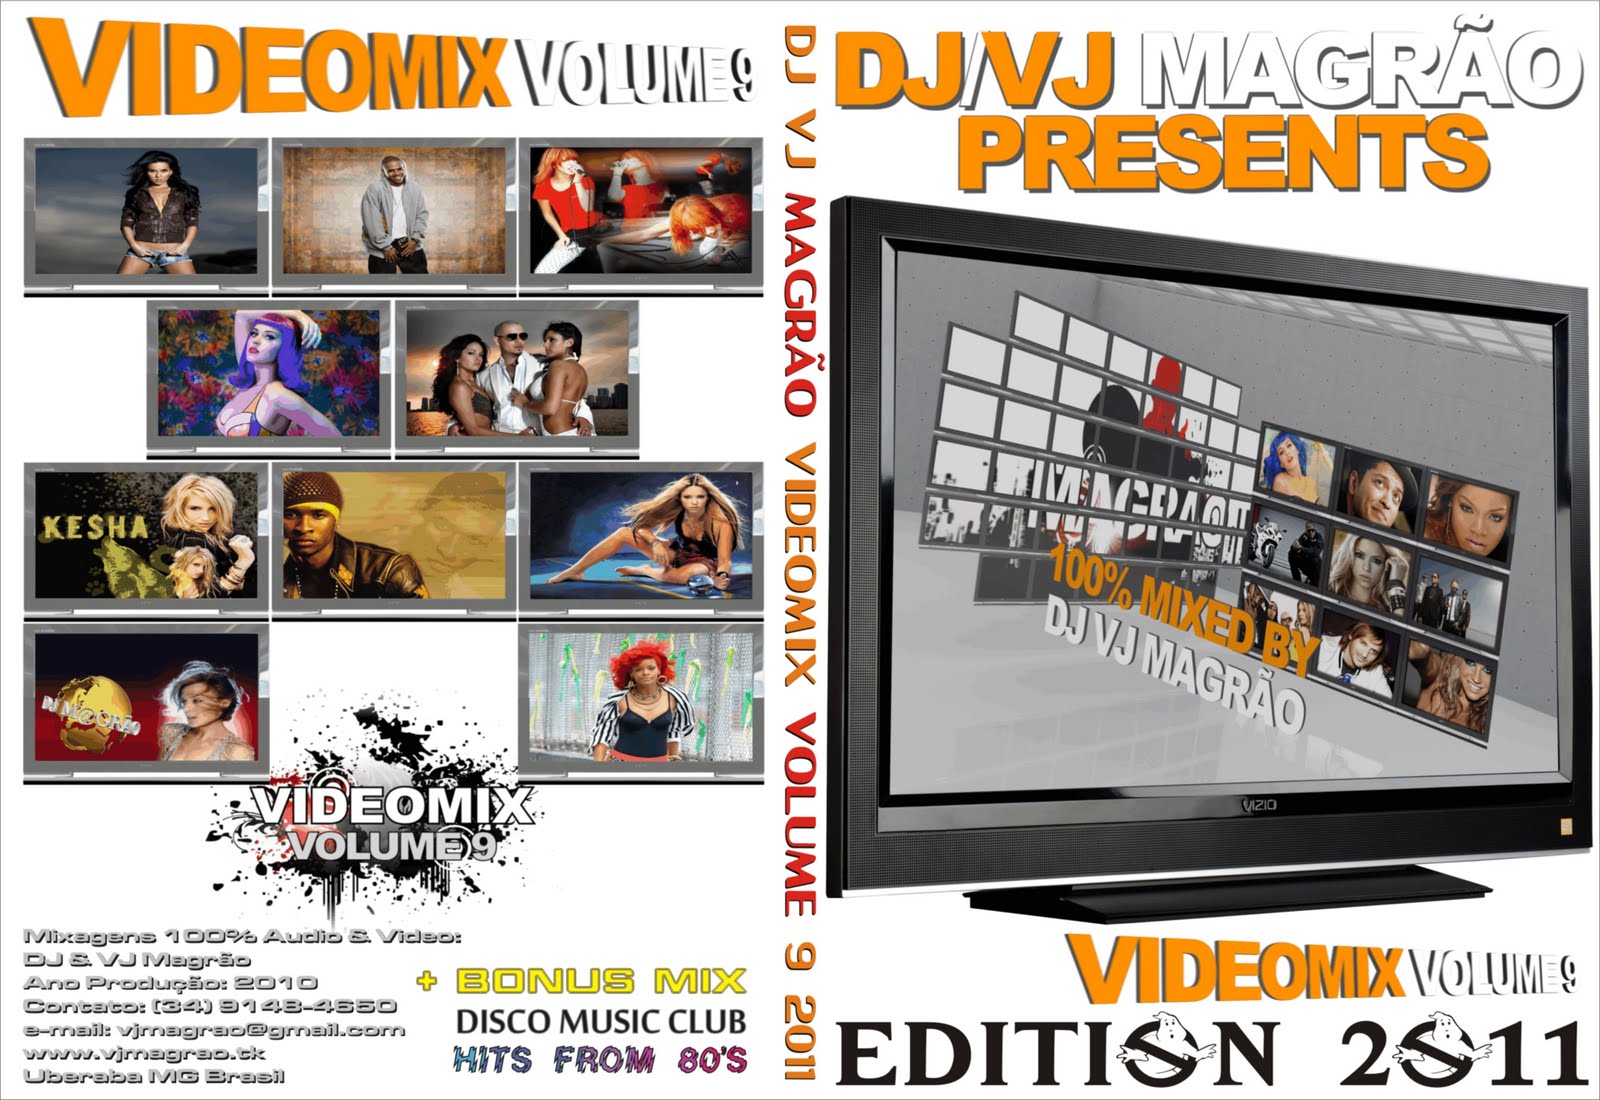 dj vj magrao videomix volume 9 2011